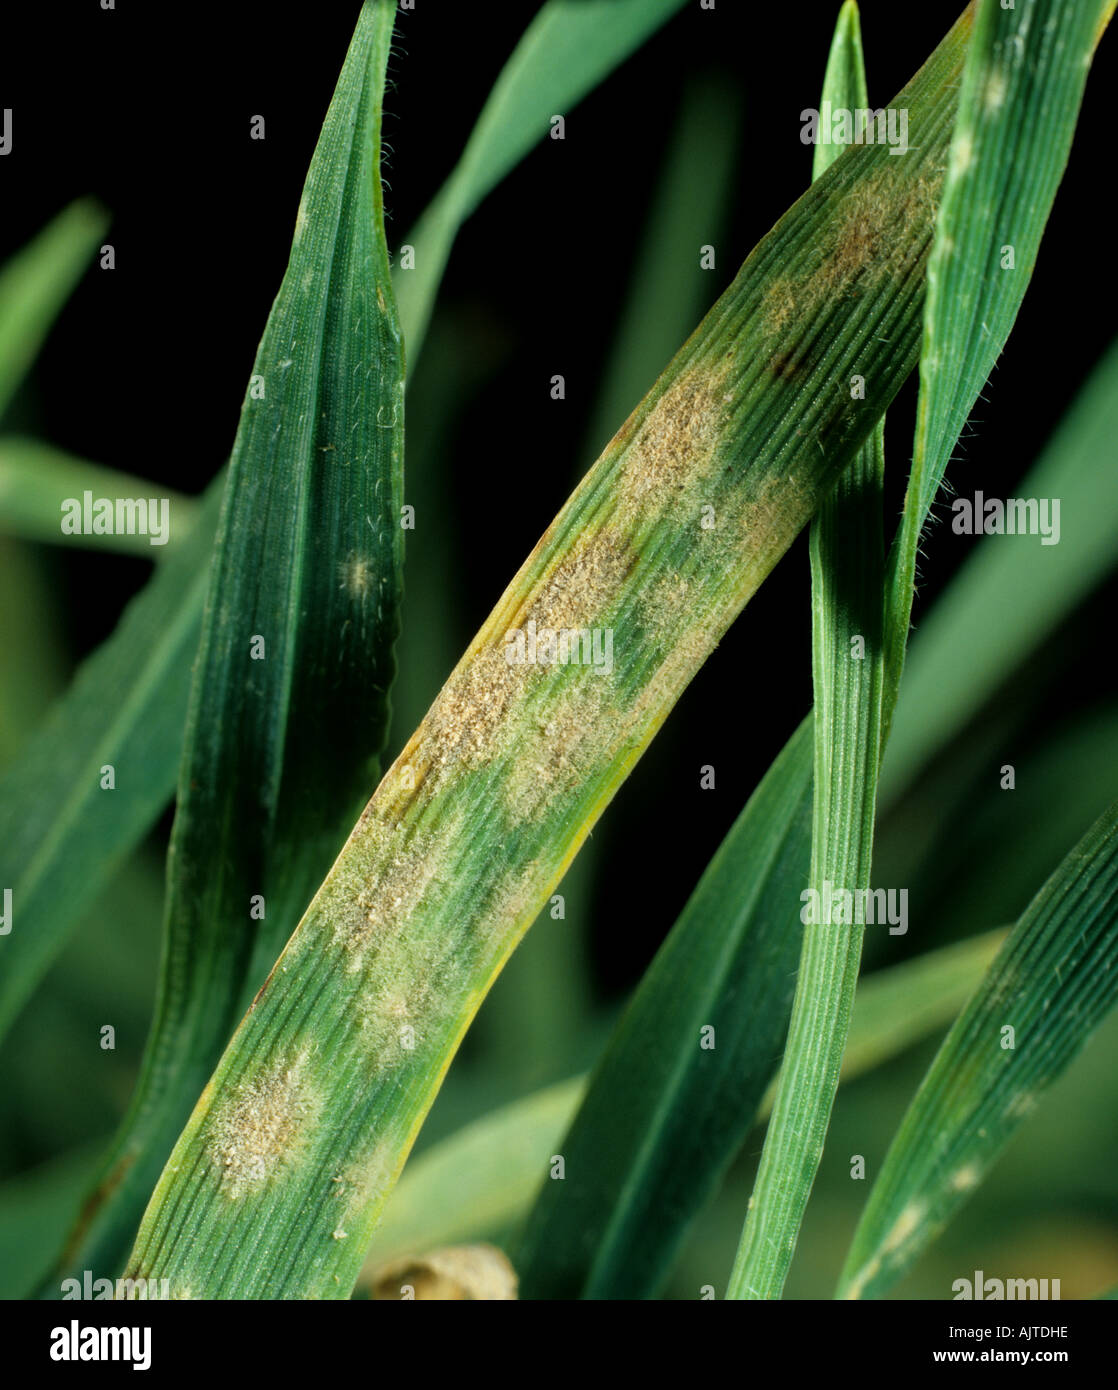 Powdery mildew (Blumeria graminis f.sp. hordei) disease pustules on young barley plant leaf Stock Photo